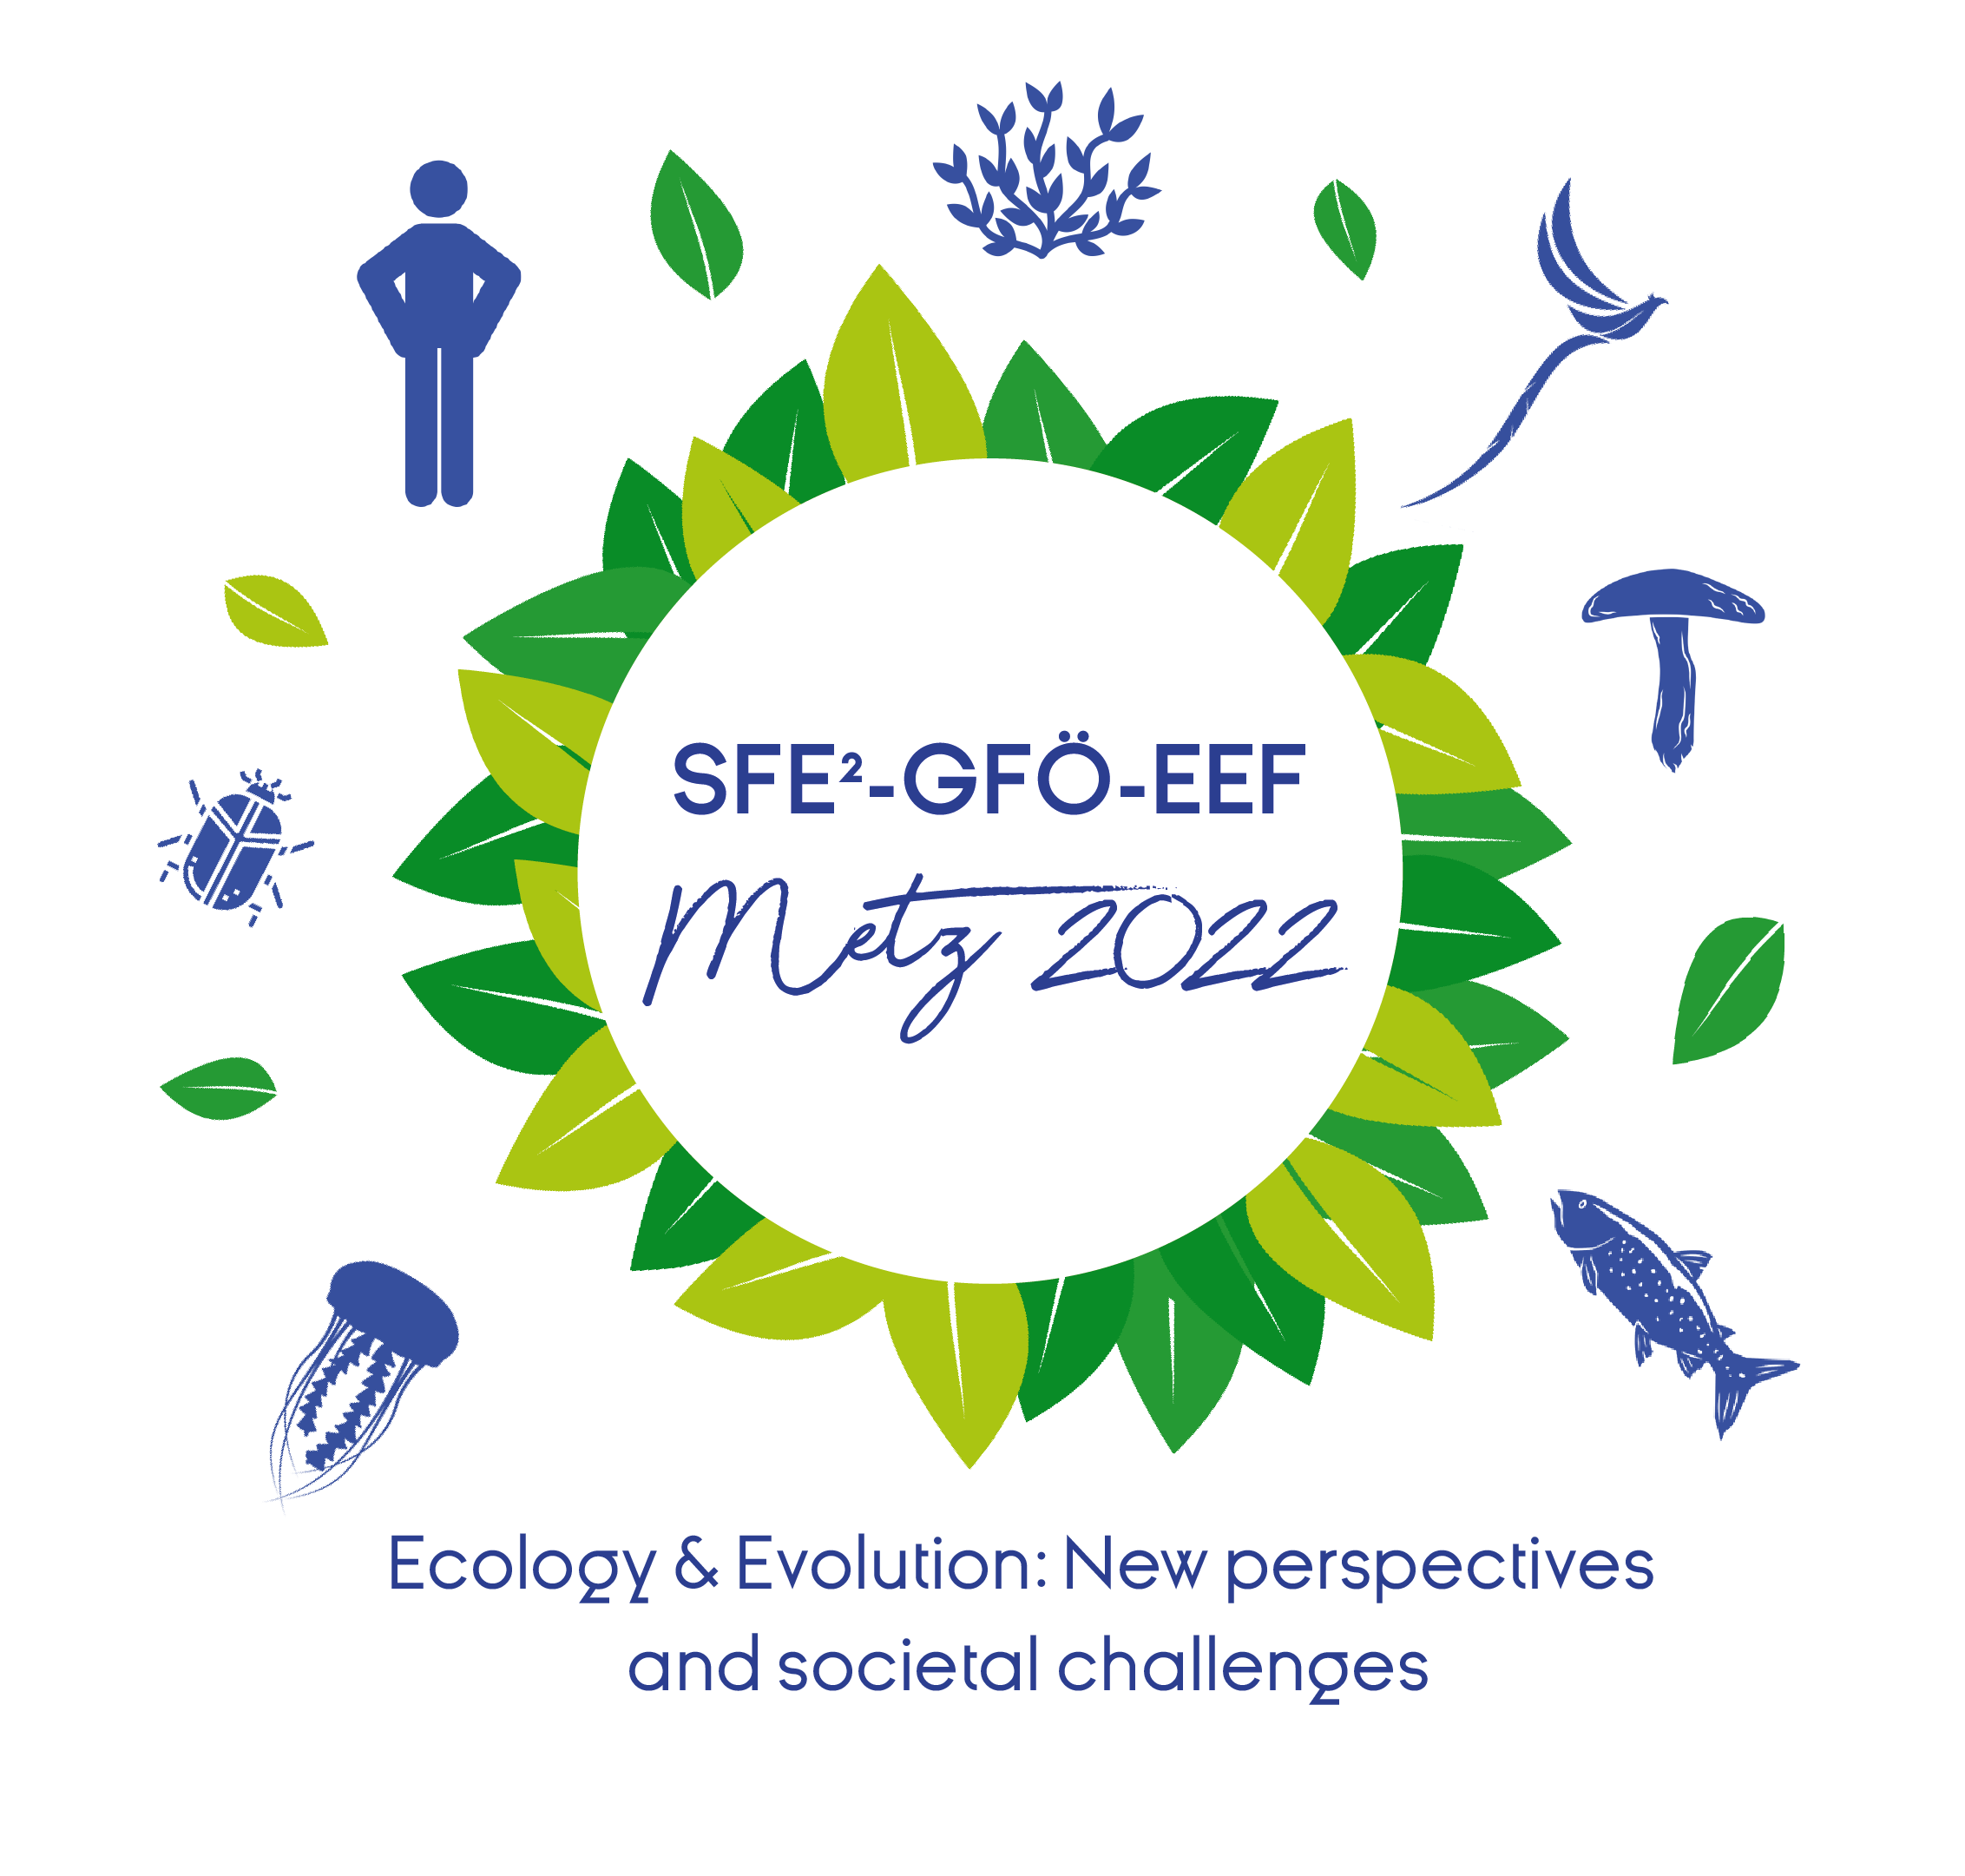 [Save the date] International Congress of Ecology & Evolution SFE2 – GfÖ – EEF